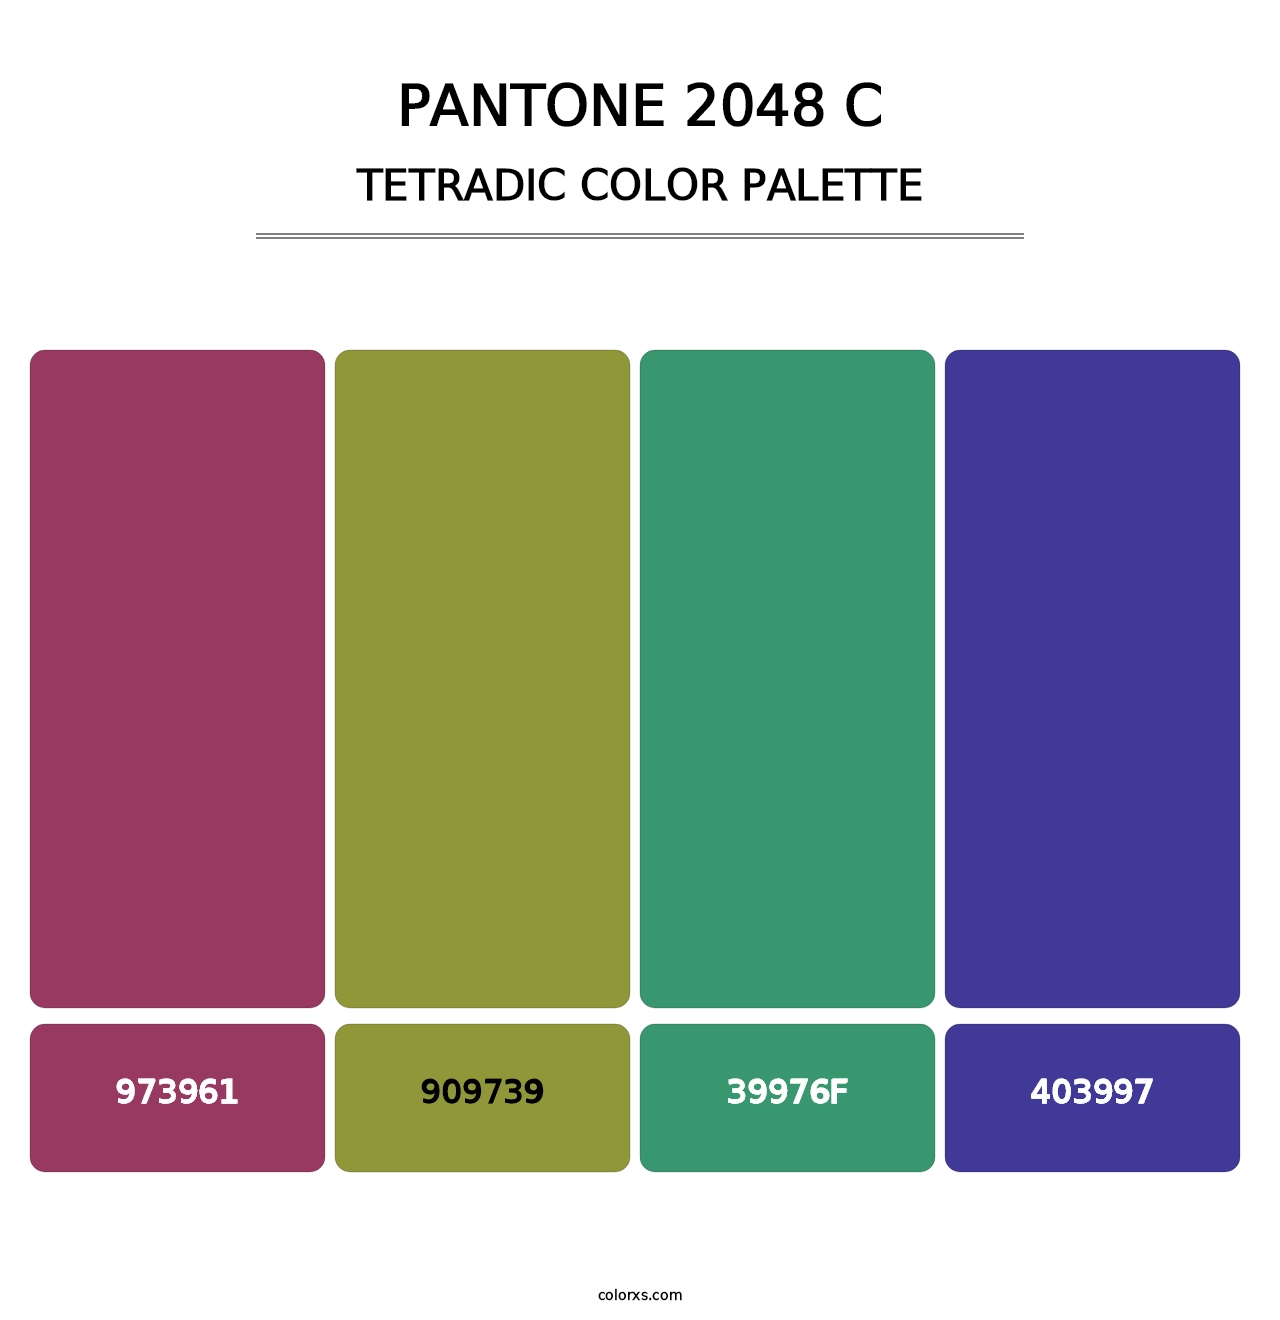 PANTONE 2048 C - Tetradic Color Palette